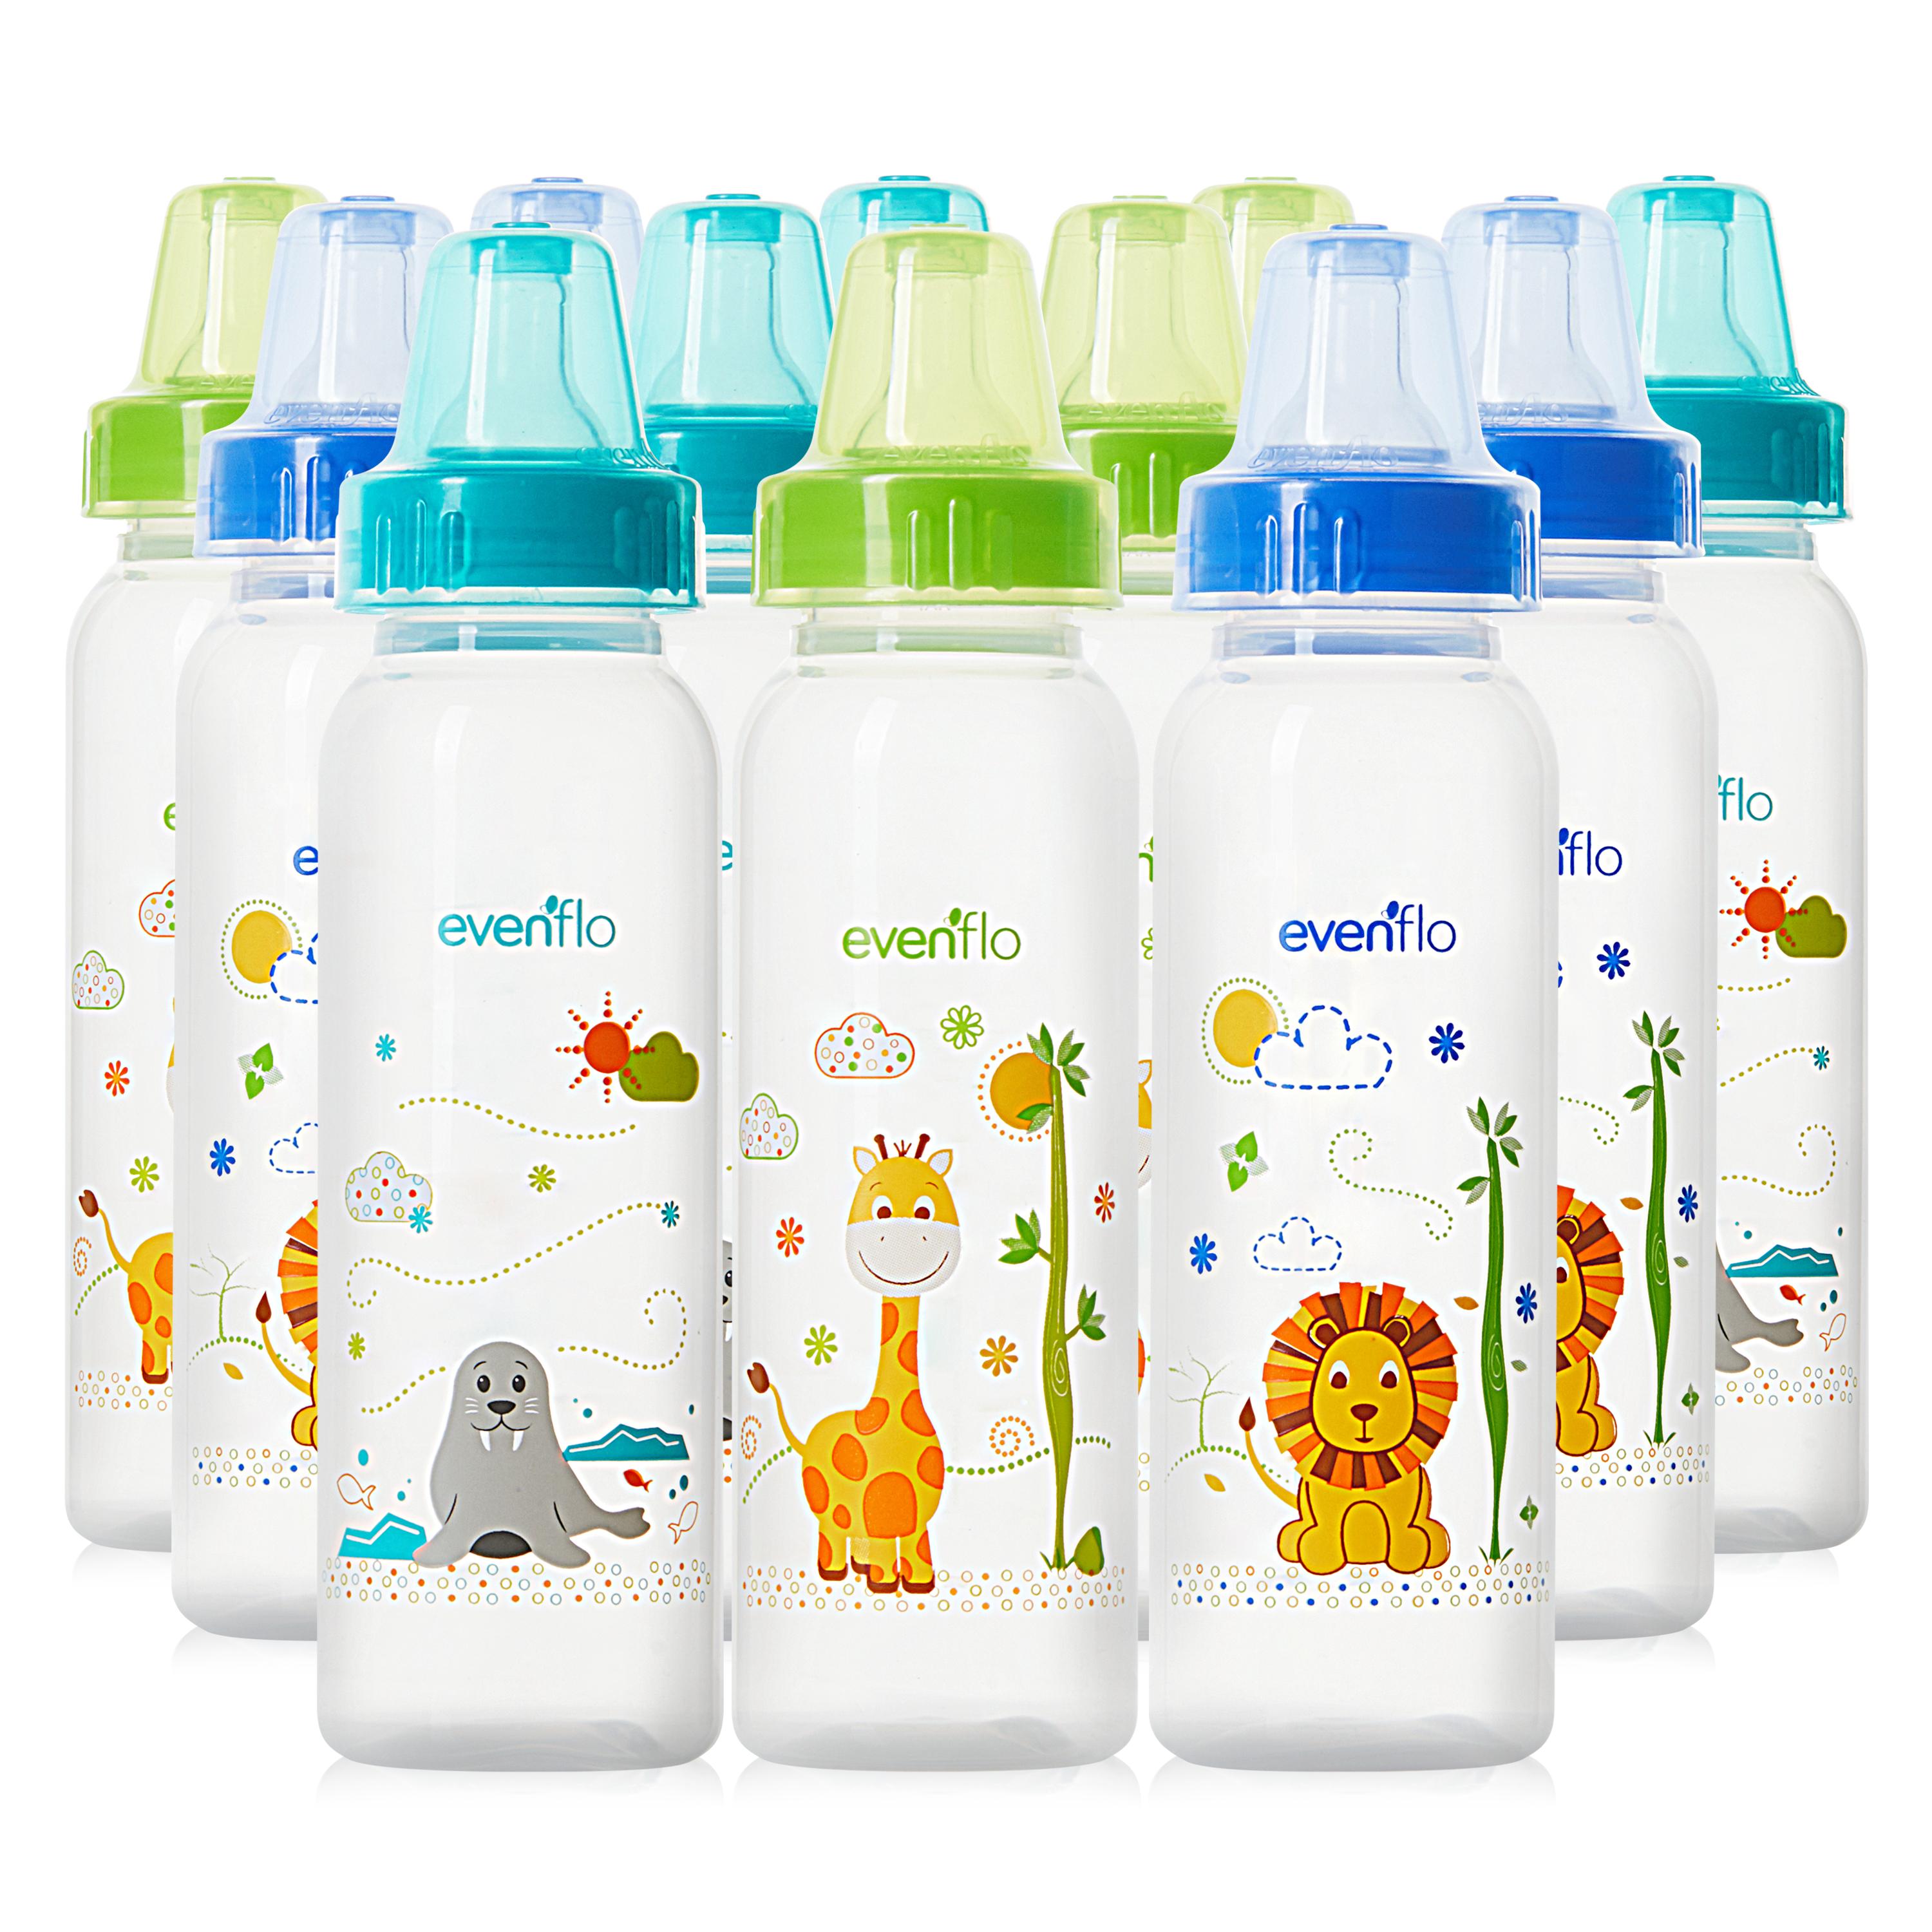 Evenflo Feeding Classic Prints Polypropylene Baby Bottle for Infant and Newborn, 8 oz (12 Pack) - image 1 of 5